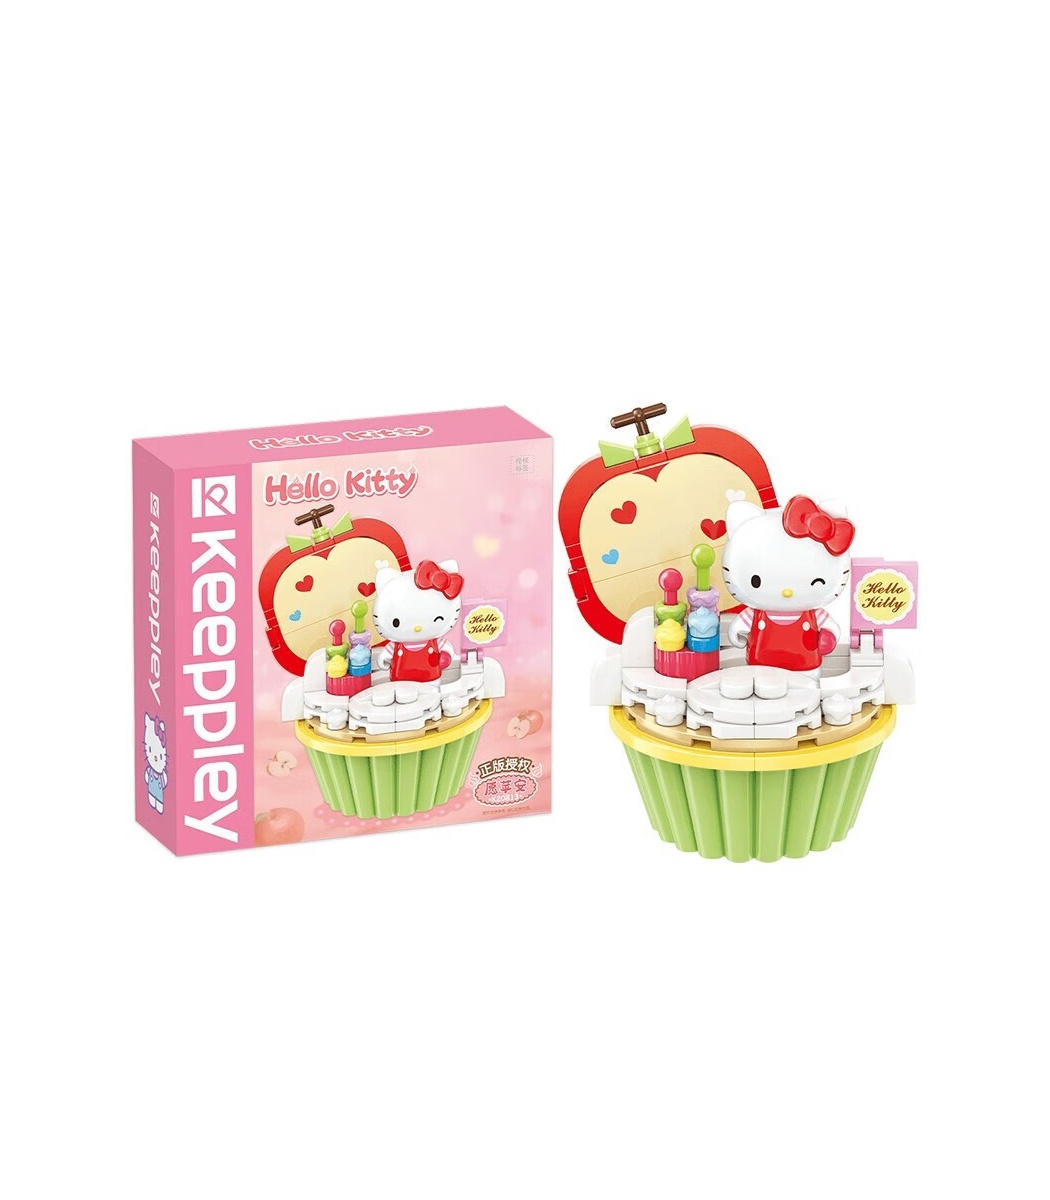 Keeppley K20813 Hello Kitty Cupcake Sanrio Series Building Blocks Toy Set